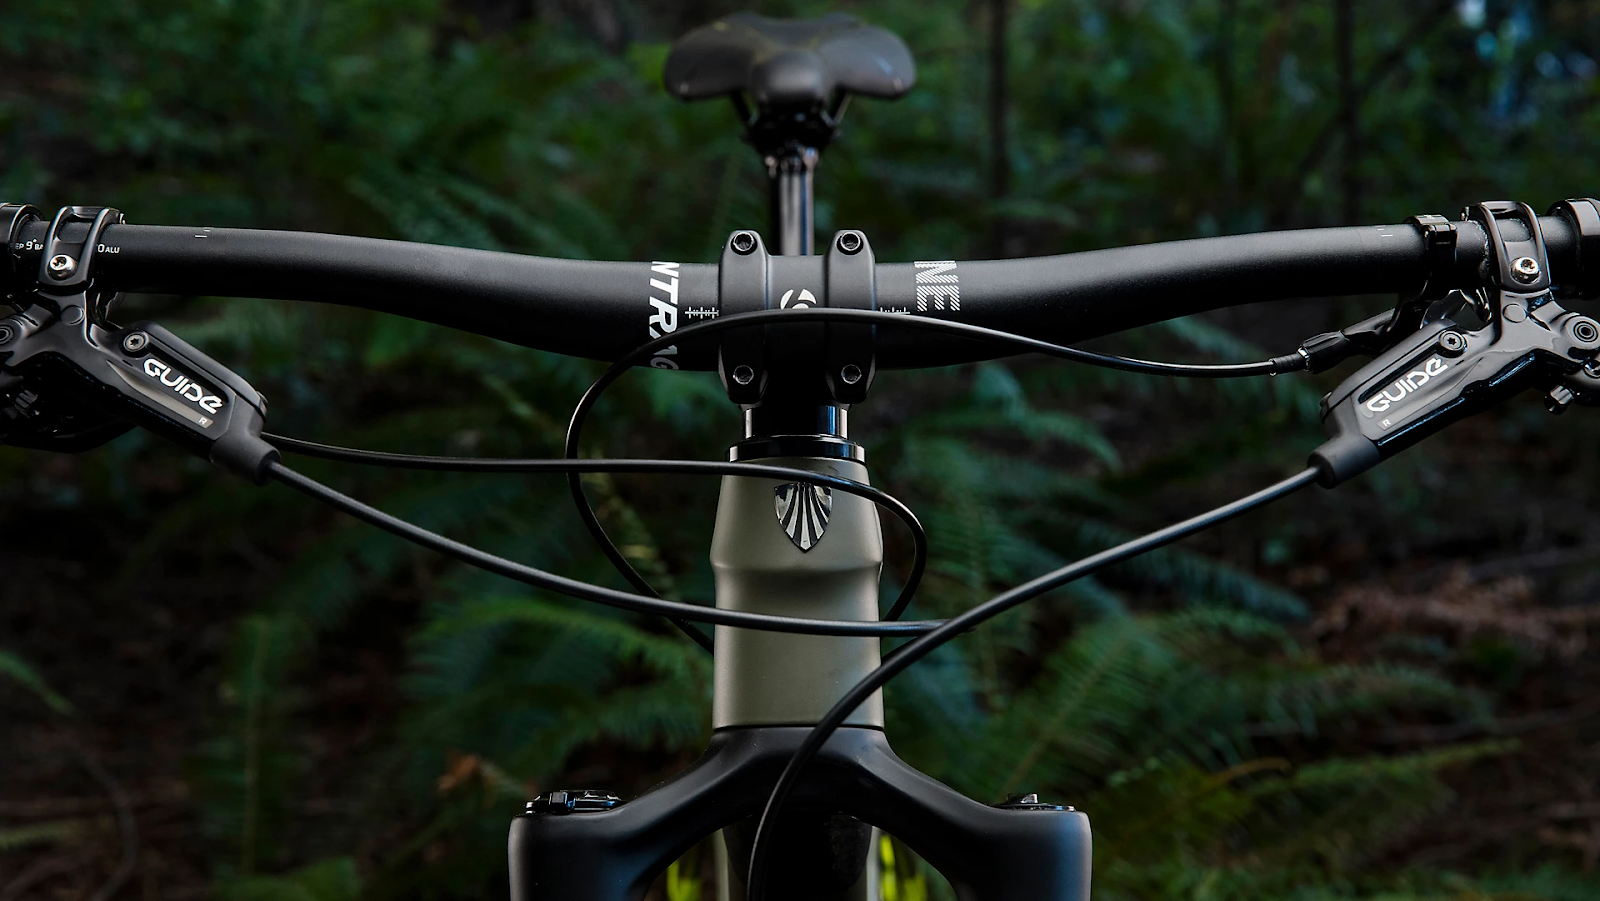 The most common style of mountain bike handlebars is flat handlebars.